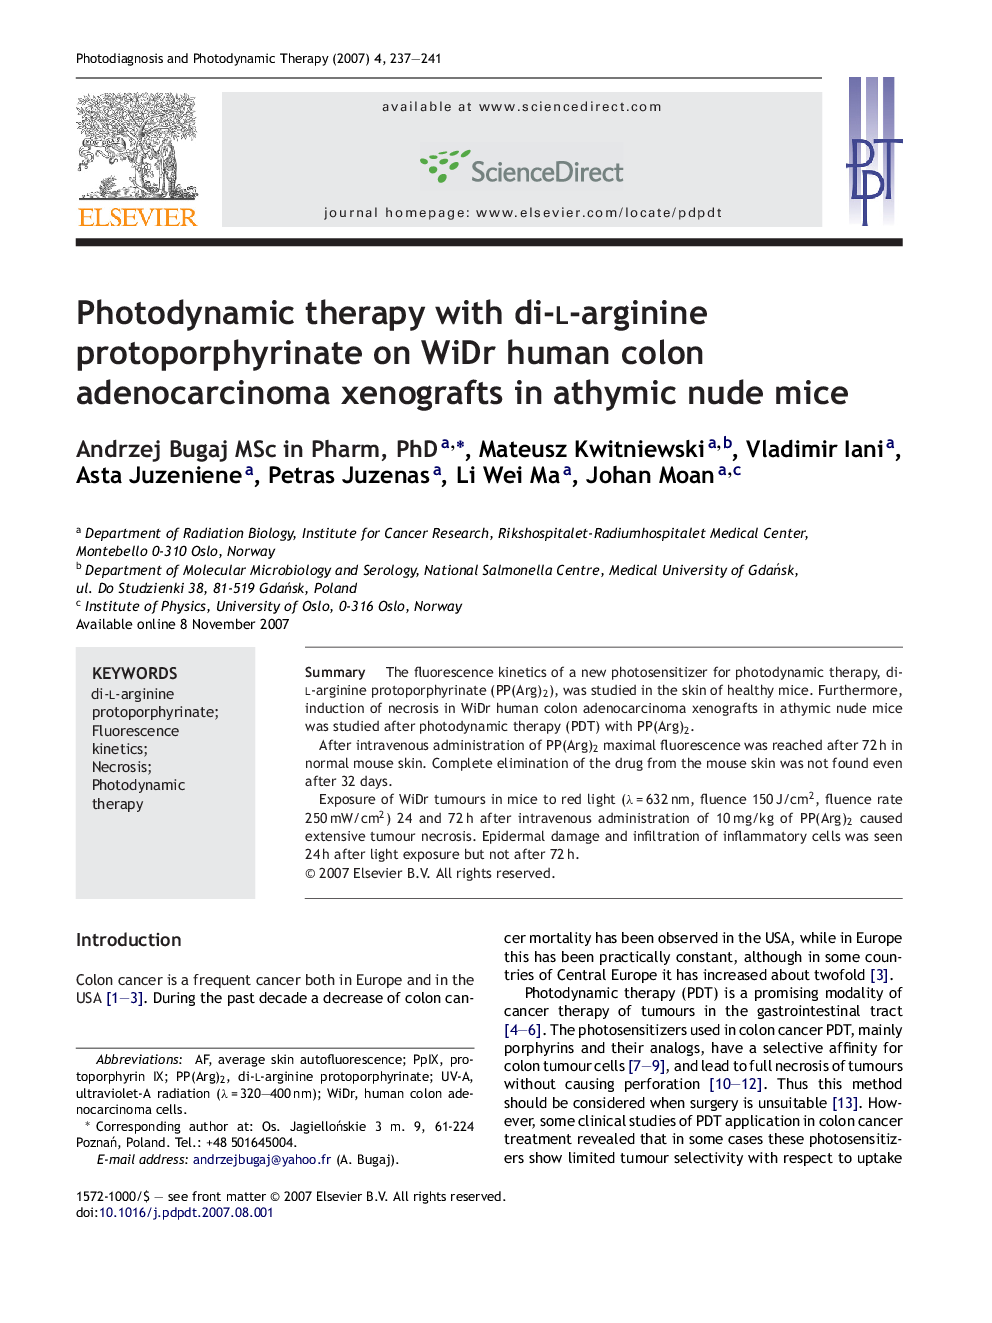 Photodynamic therapy with di-l-arginine protoporphyrinate on WiDr human colon adenocarcinoma xenografts in athymic nude mice